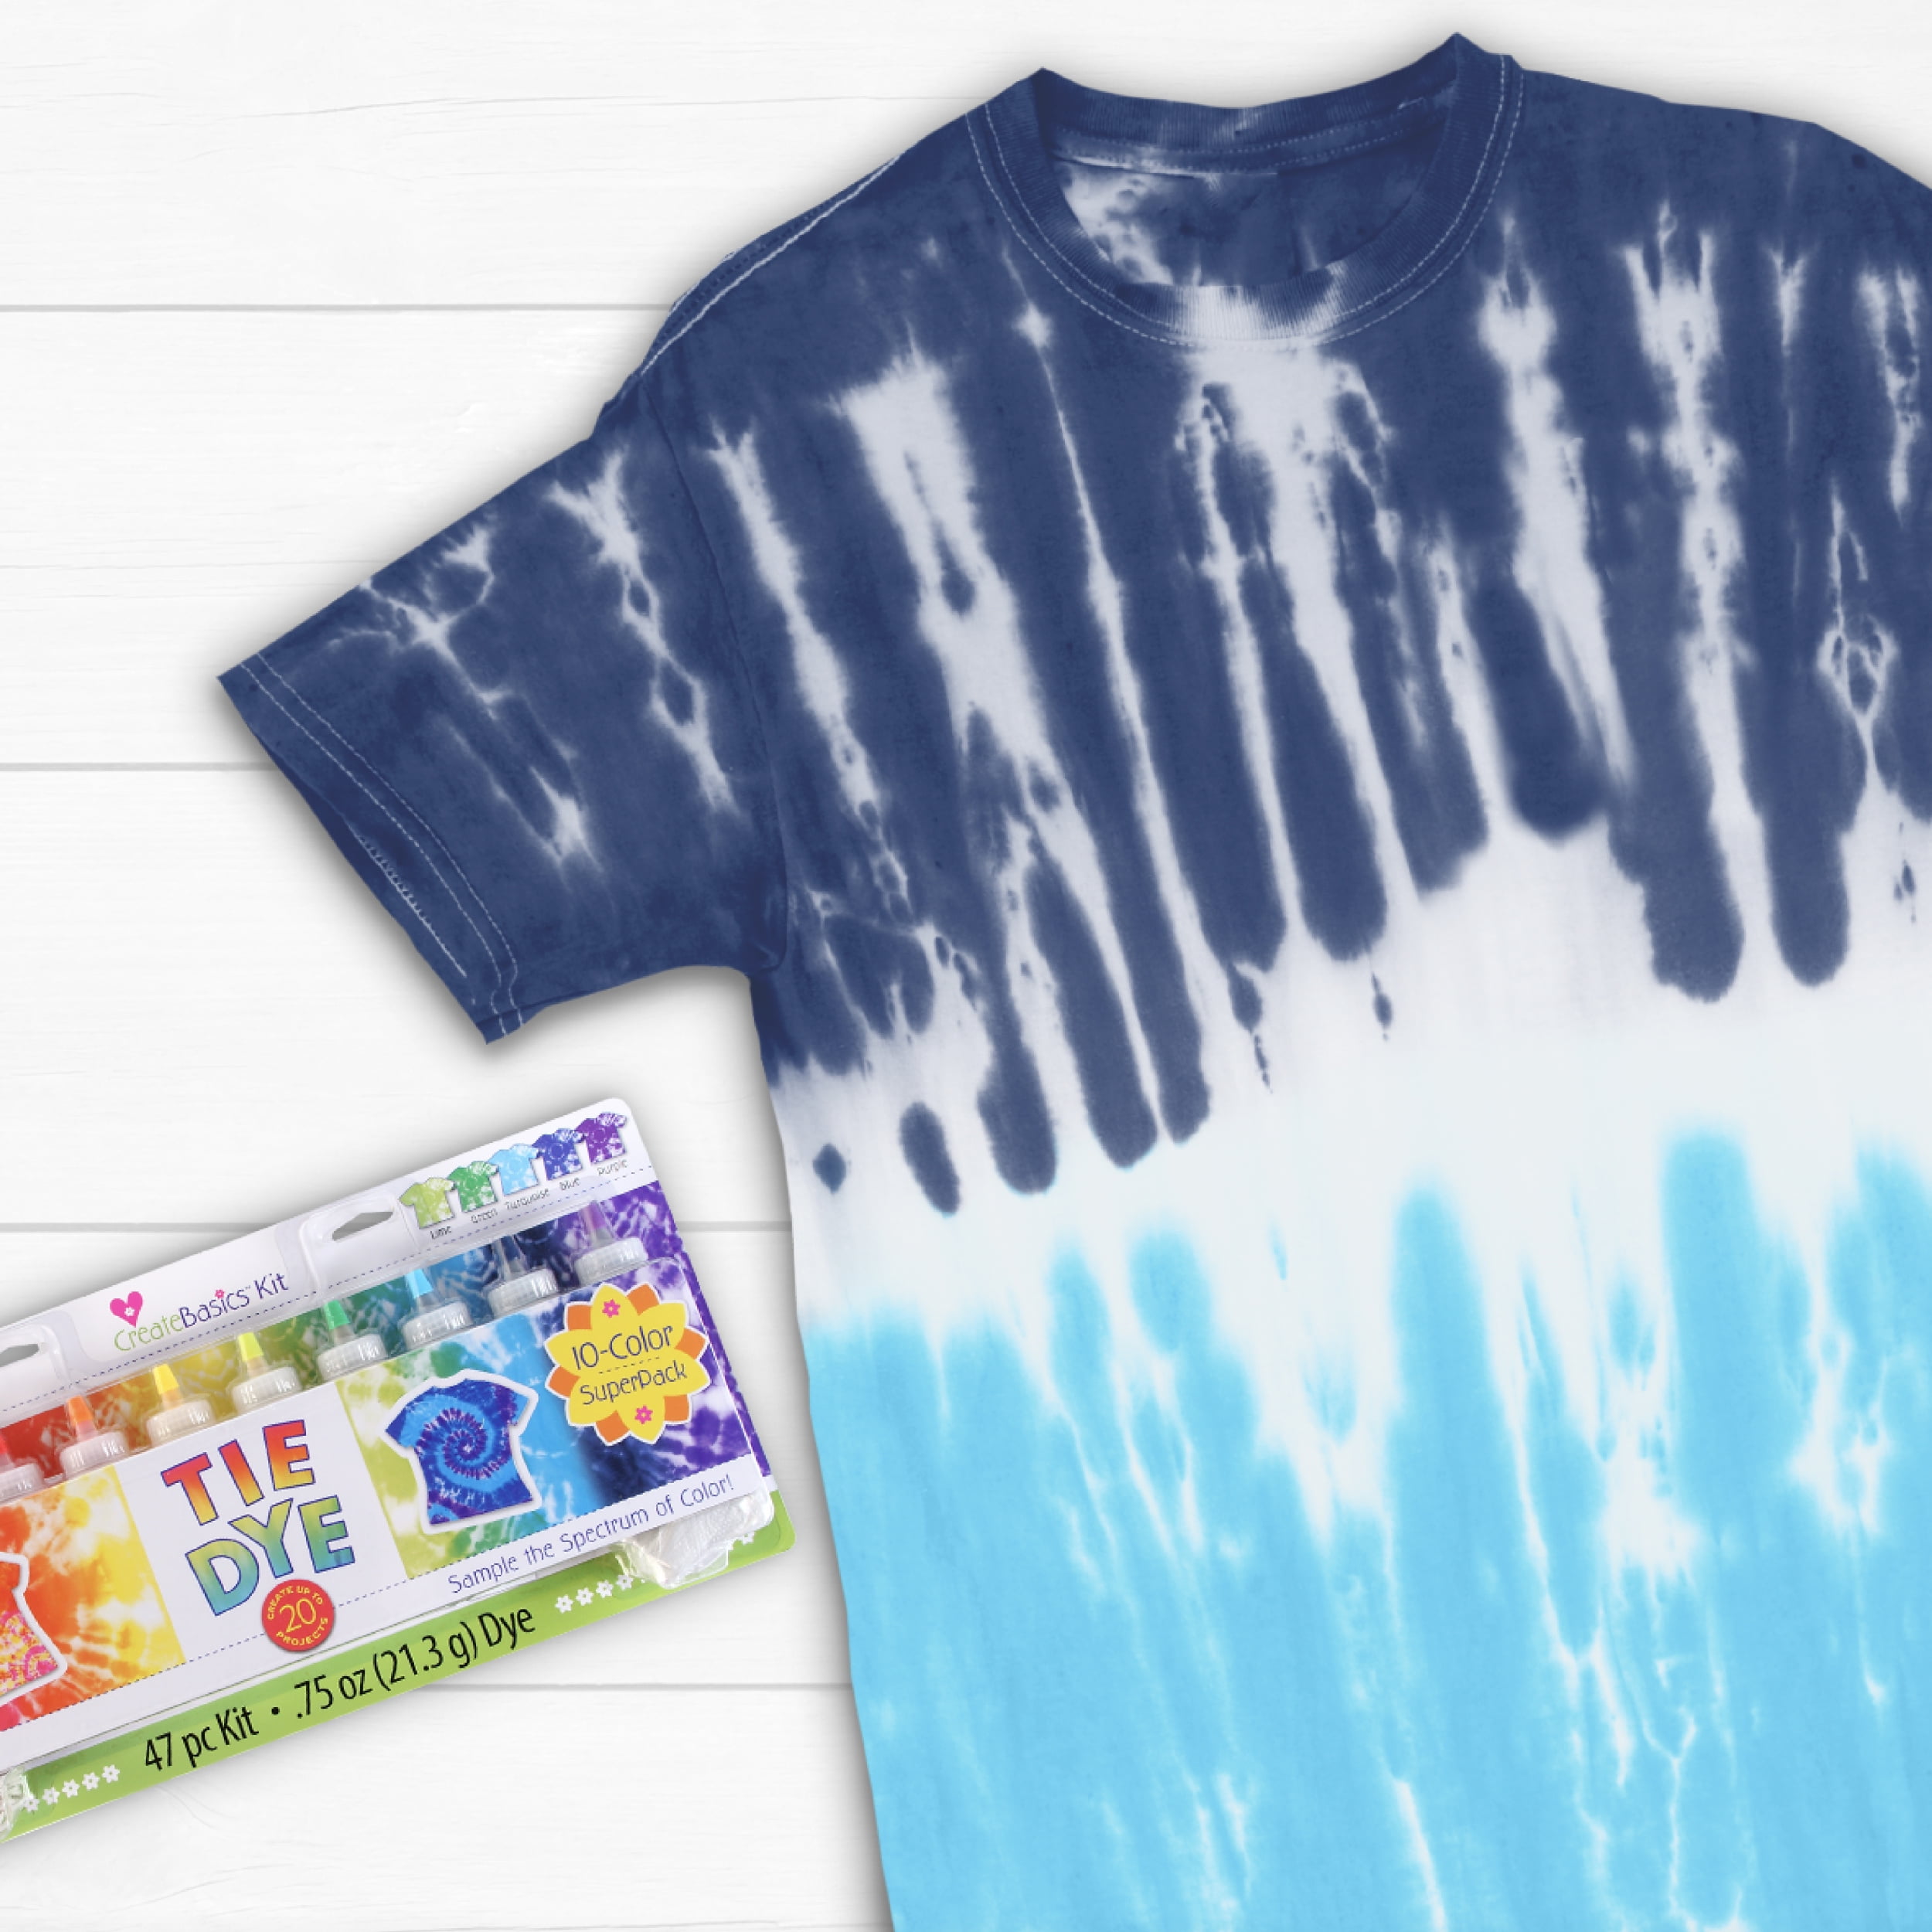 Create Basics 10 Color Tie Dye Kit, Rainbow Colors